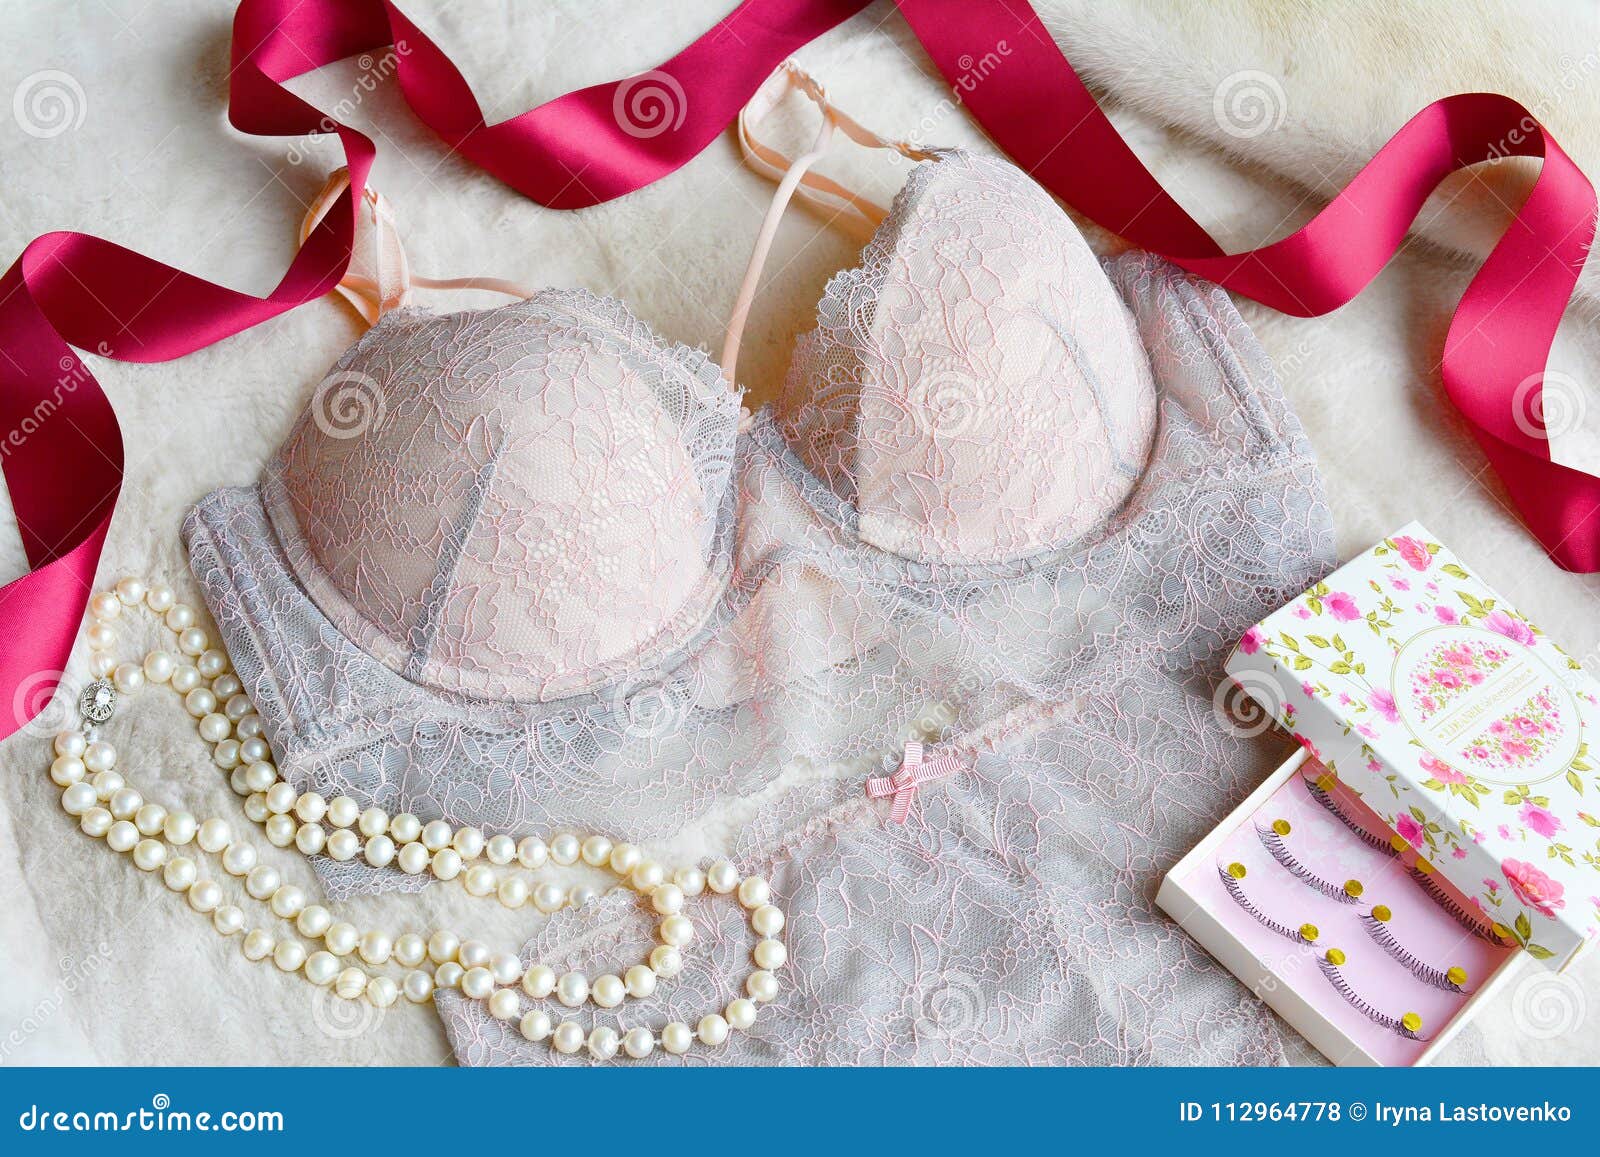 Women`s Lace Underwear Gentle Pink Color: Bra and Panties. Stock